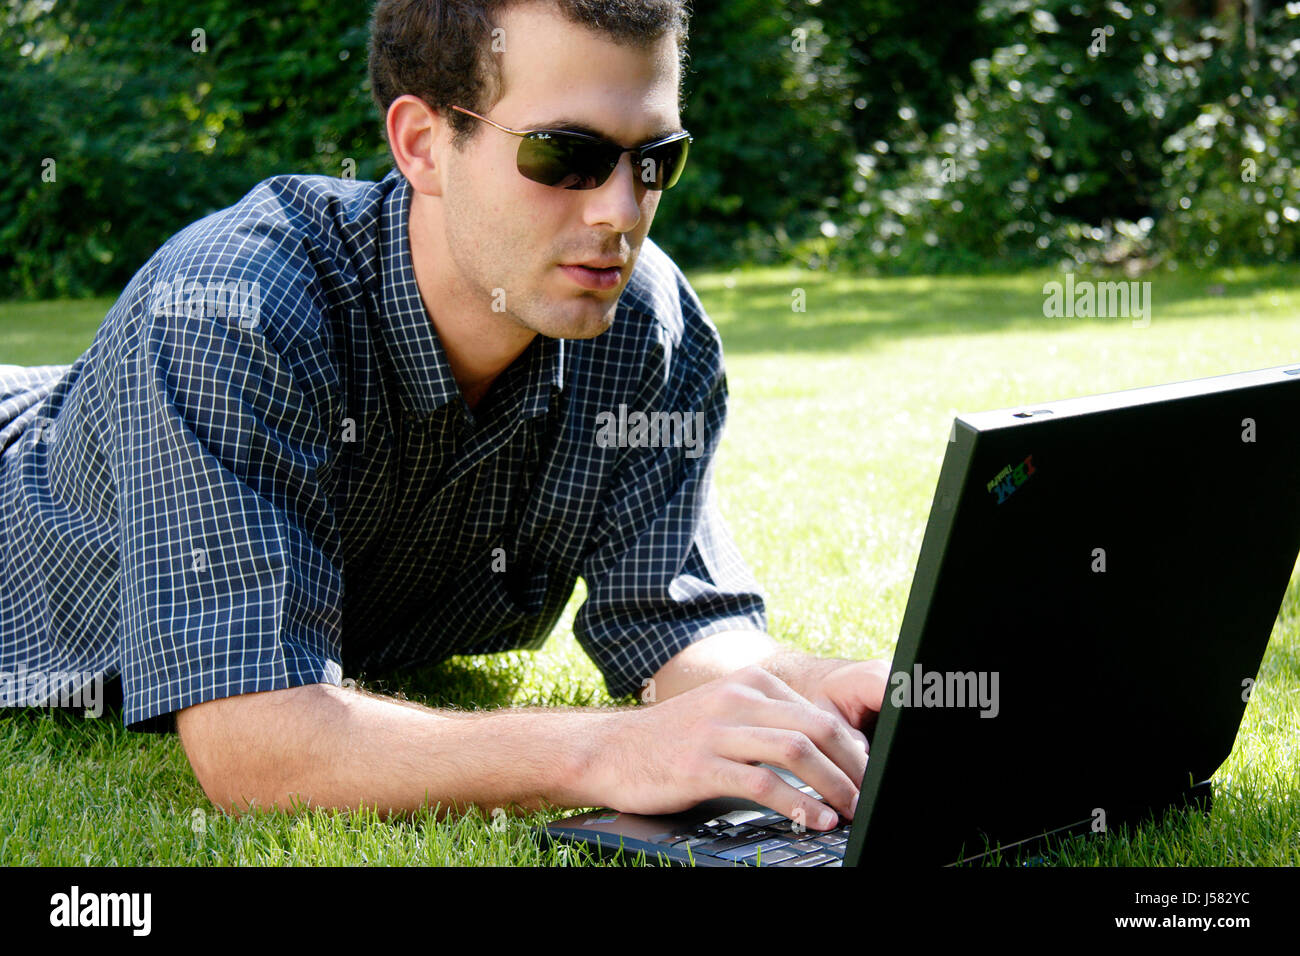 laptop notebook computers computer PC paper academic work garden green snug lie Stock Photo